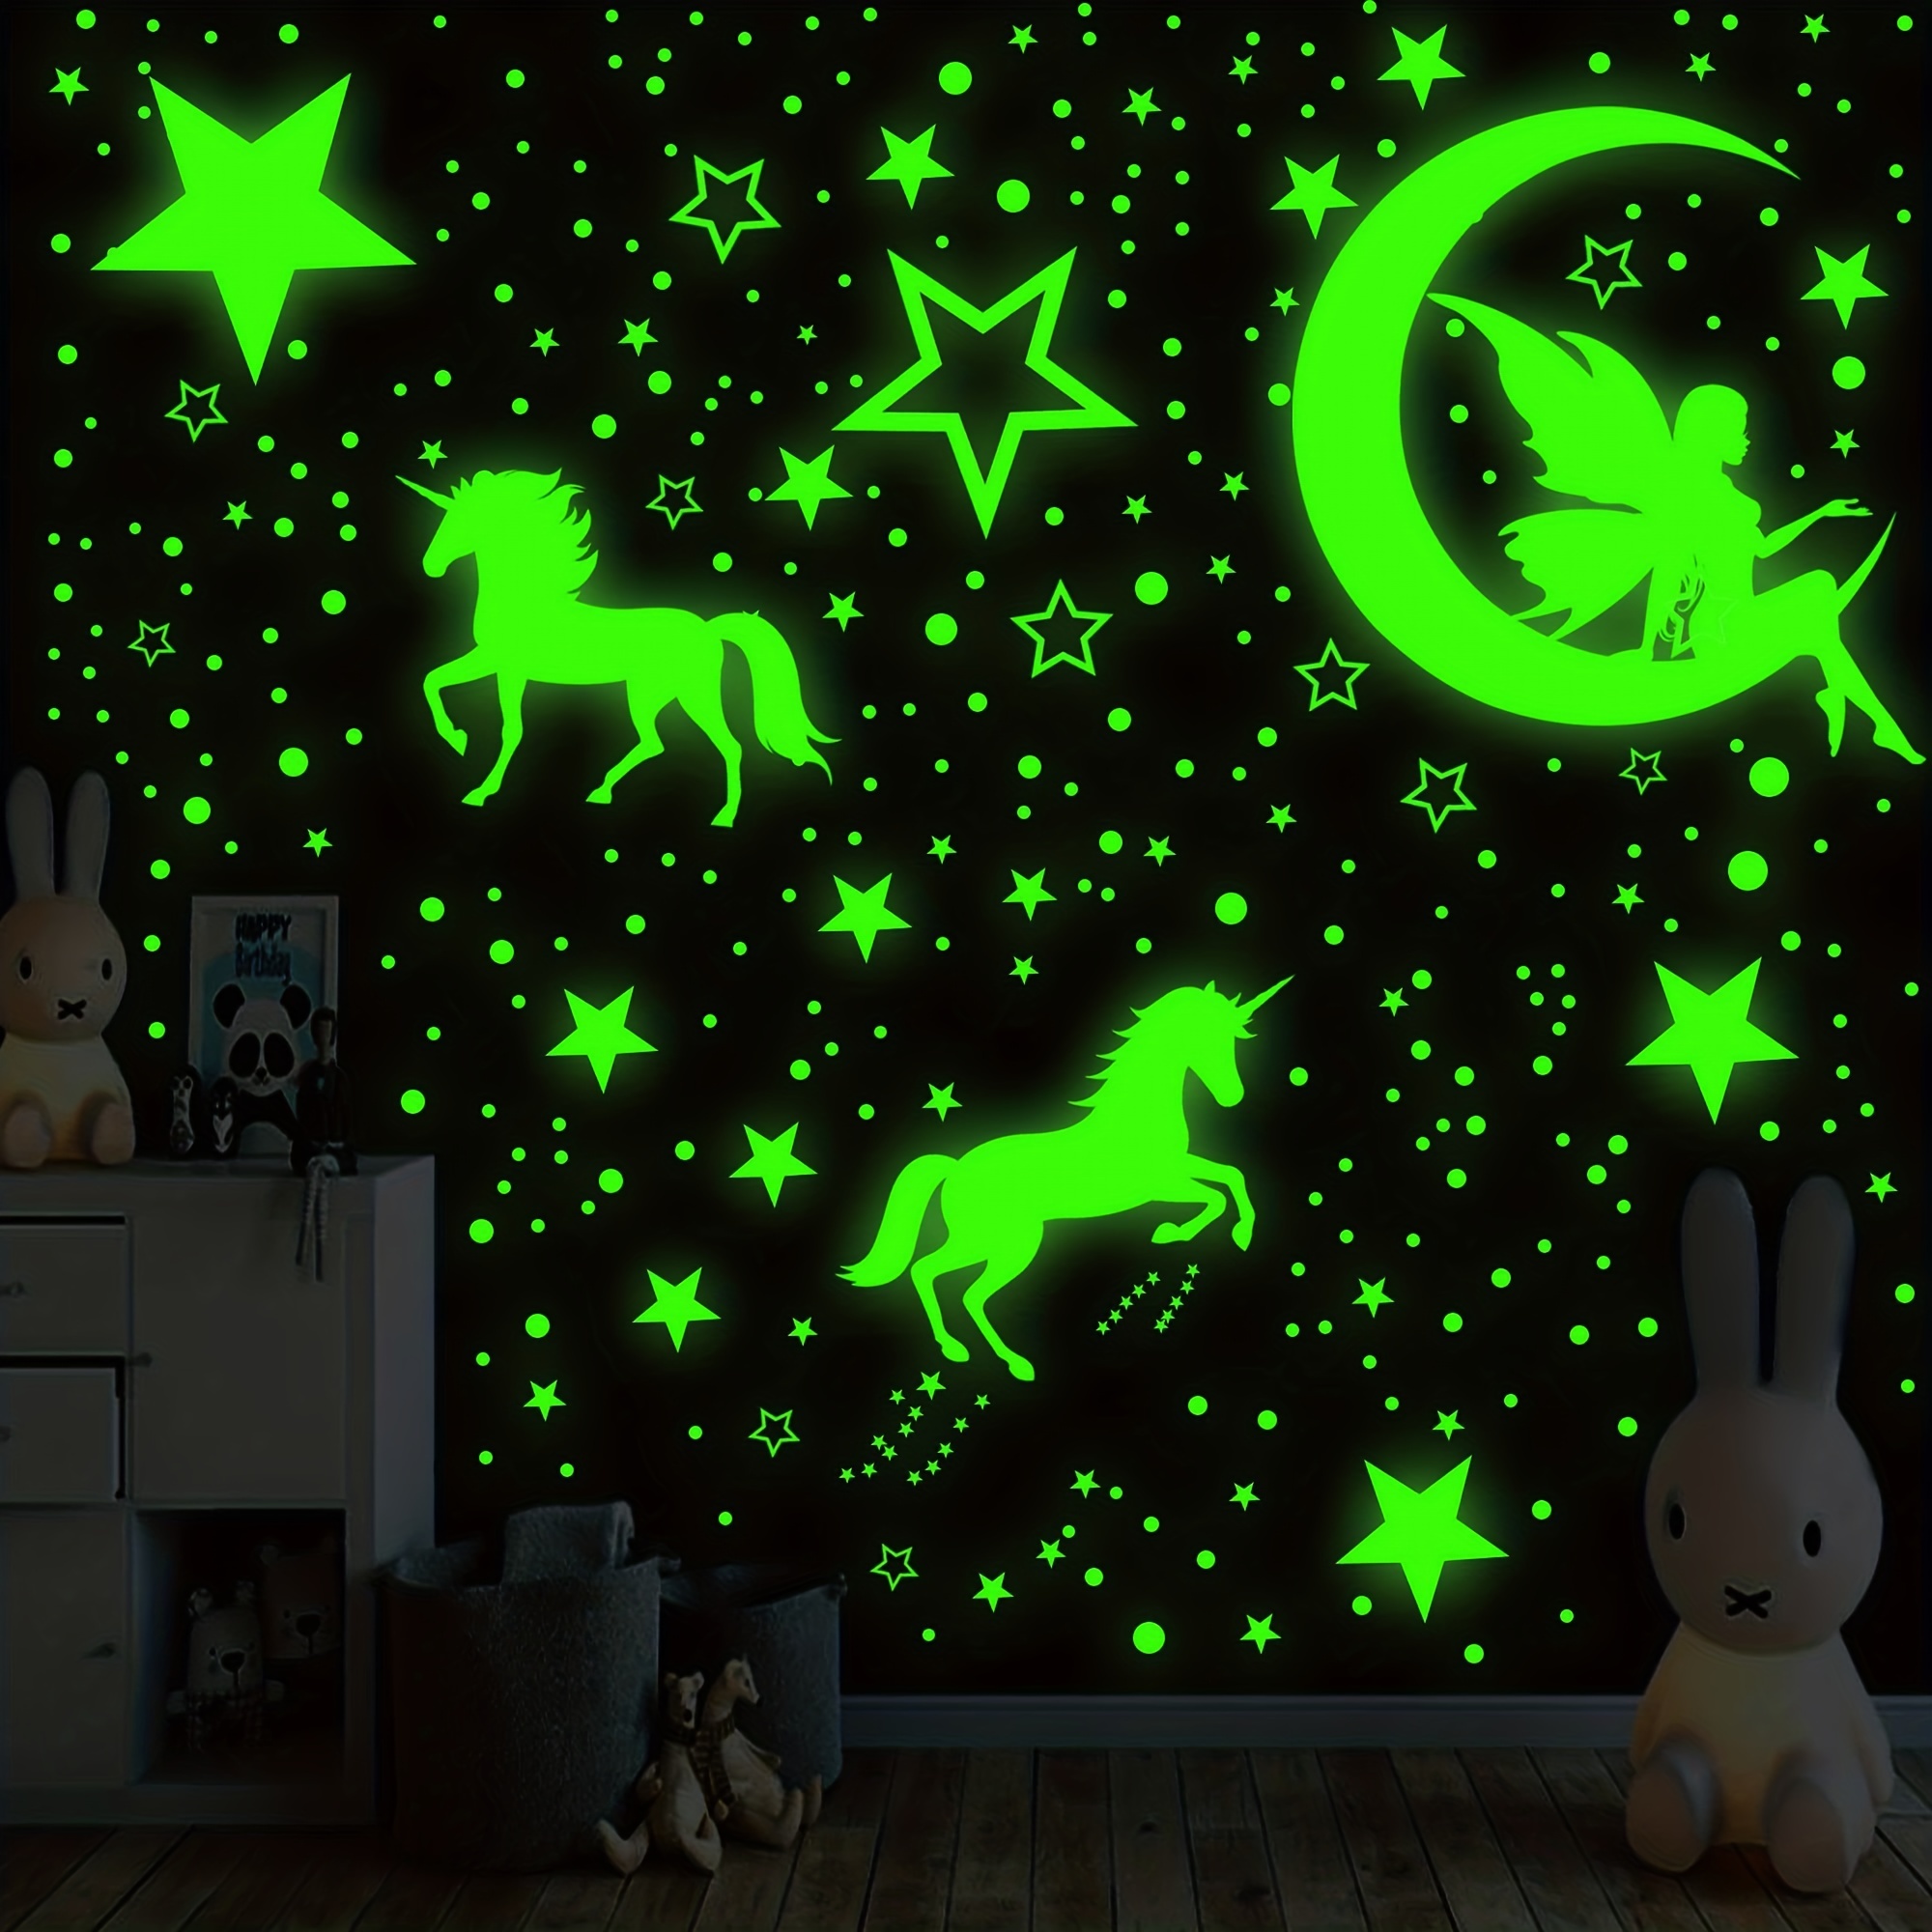 WallPops Enchanting Unicorns Glow in the Dark Wall Art Kit Wall Decals  WPK3019 - The Home Depot